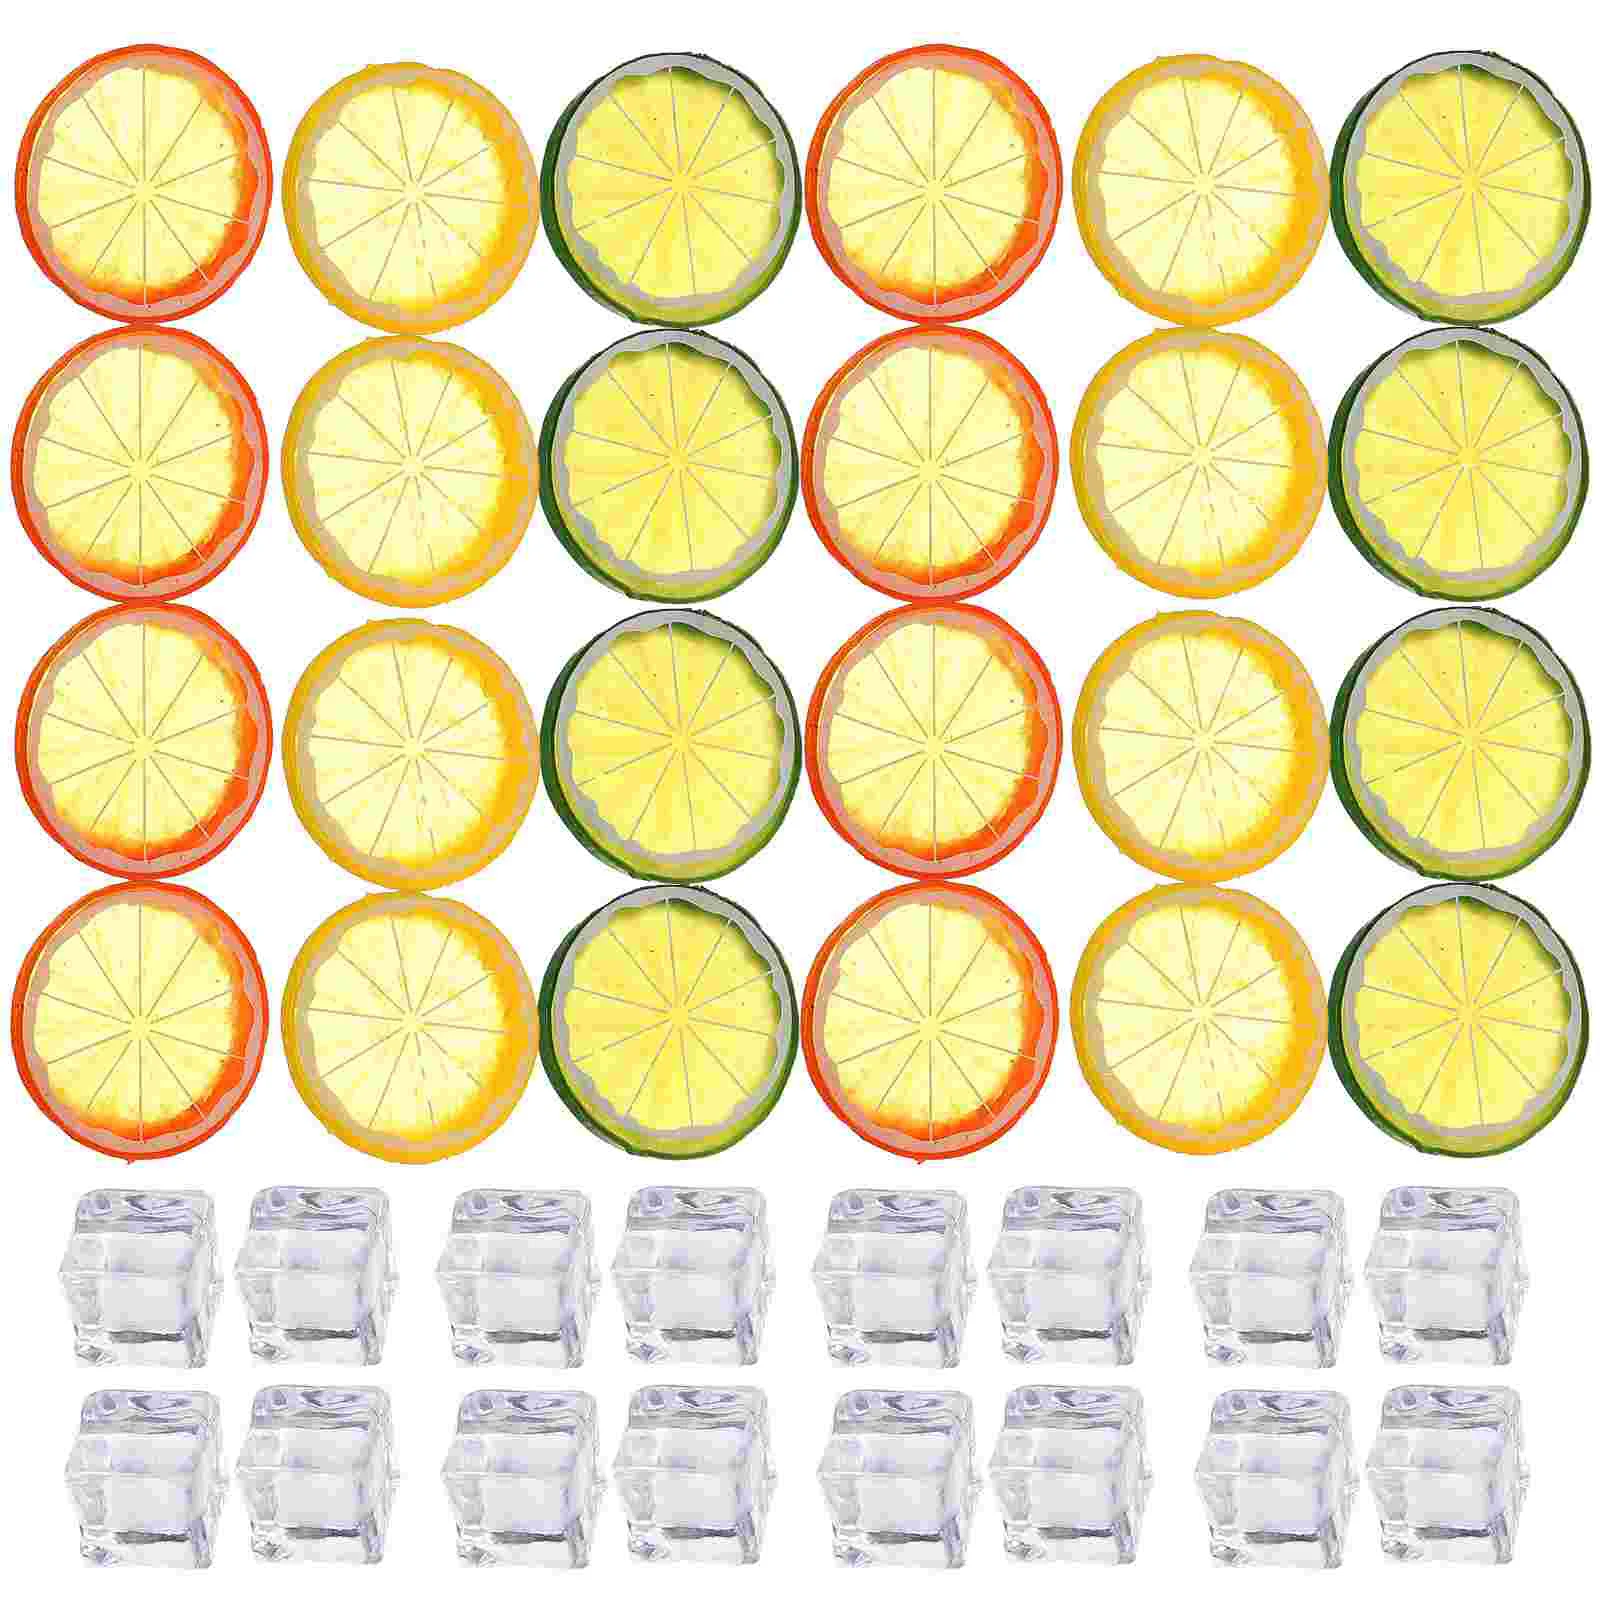 

Fruit Simulation Lemon Fake Lemons Slices Artificial Model Ornaments Plastic Fruits